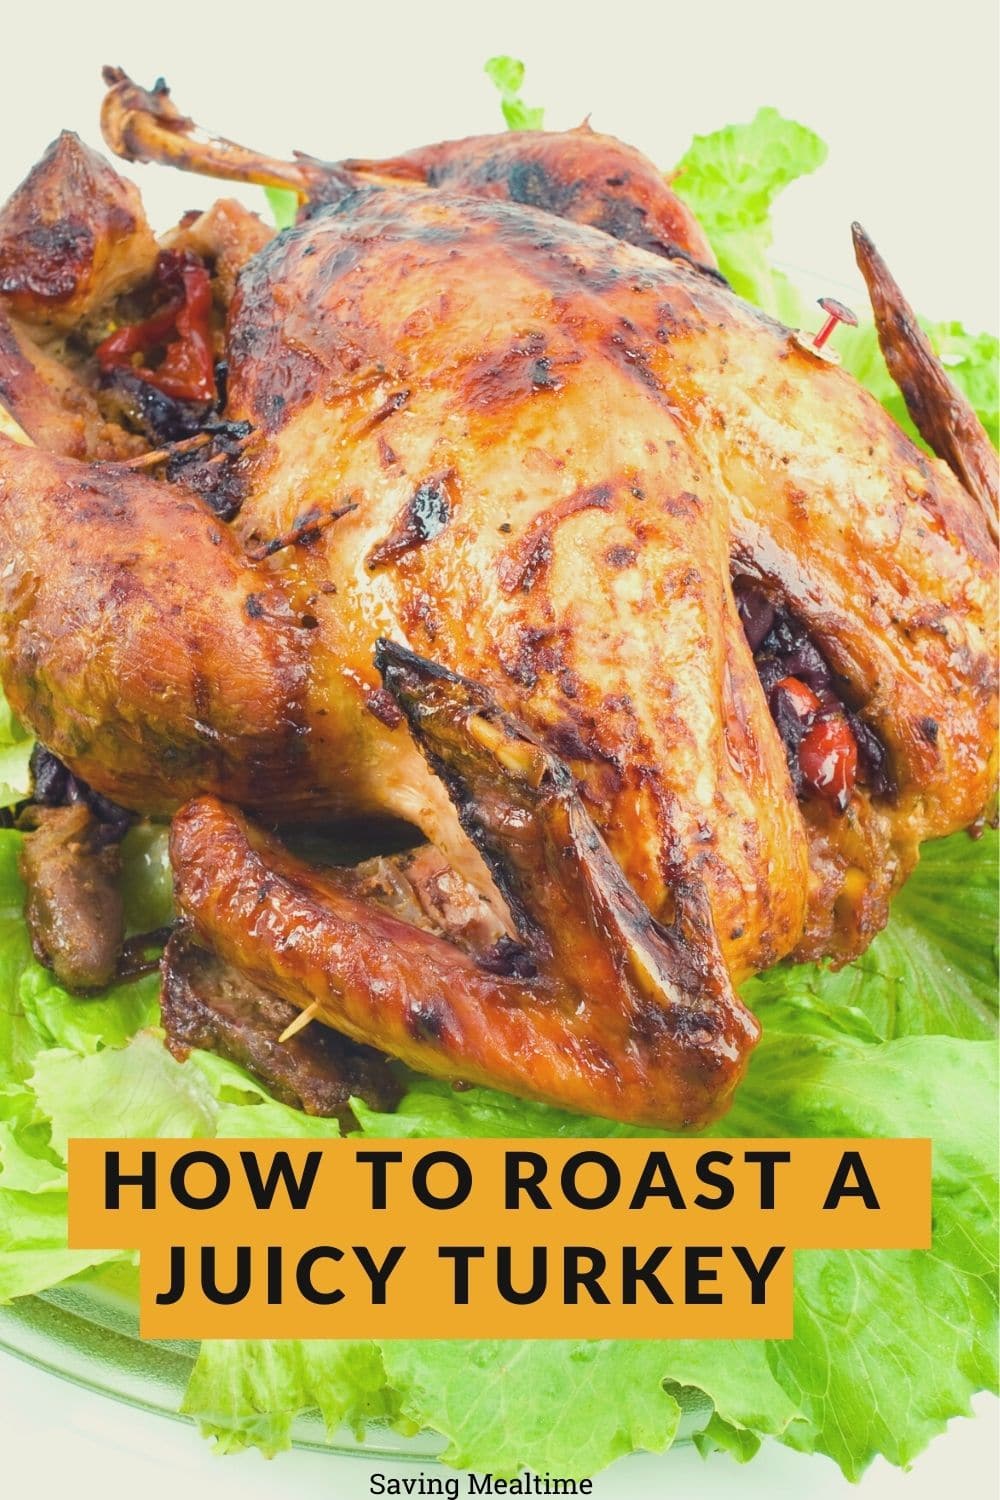 How to Roast a Tasty and Juicy Turkey